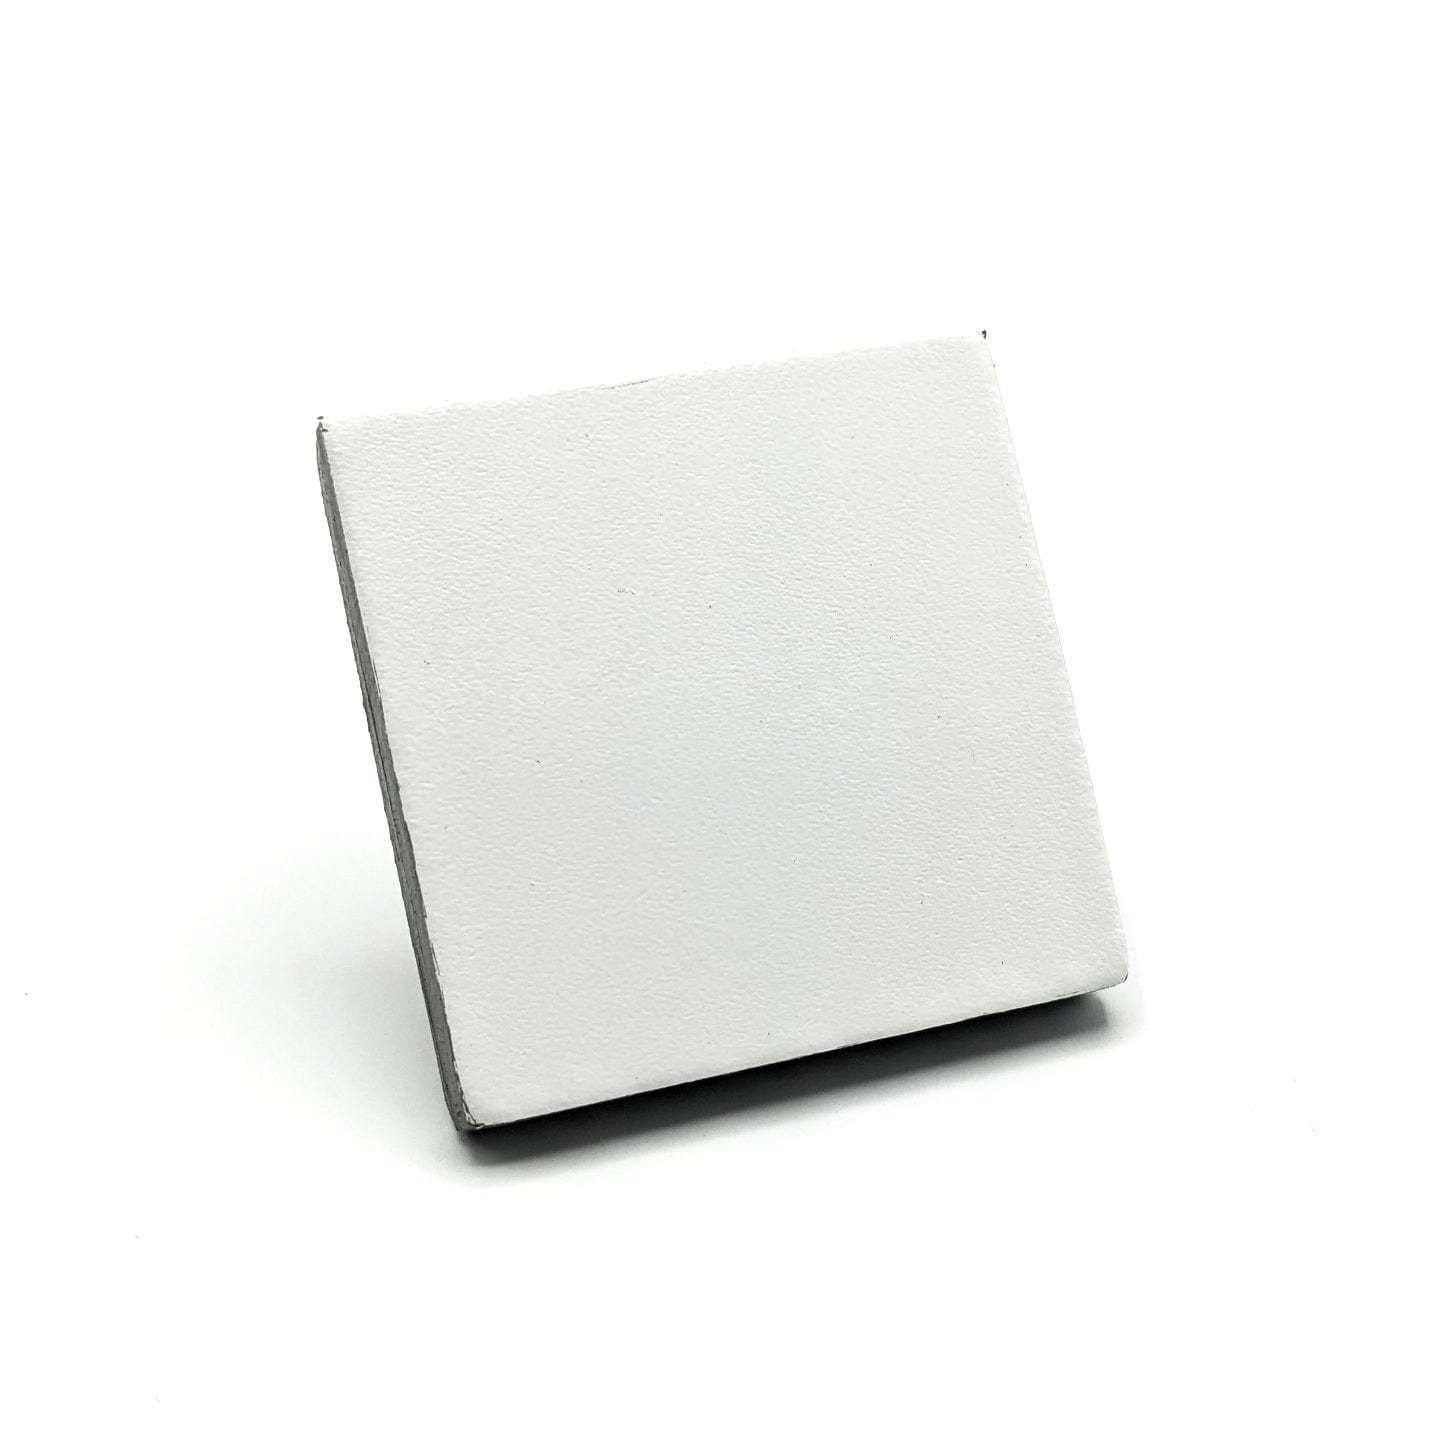 BEVERLY SMART Rings Blanc mat / Carrée / Grande Bagues contemporaines en cuir